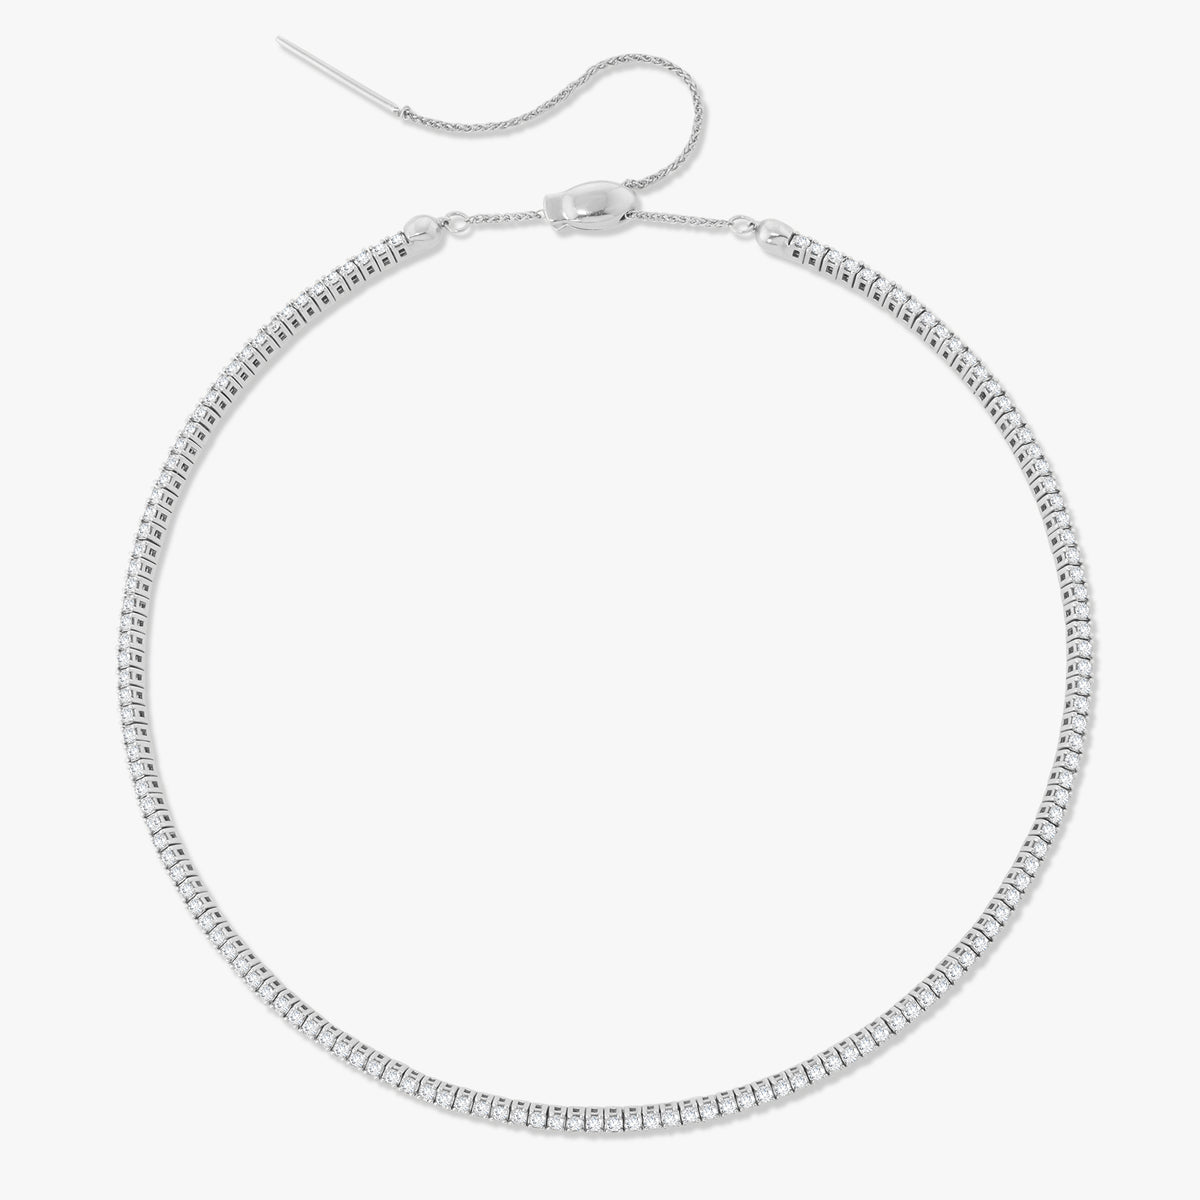 As if Adjustable Diamond Choker Necklace 3.33 ctw